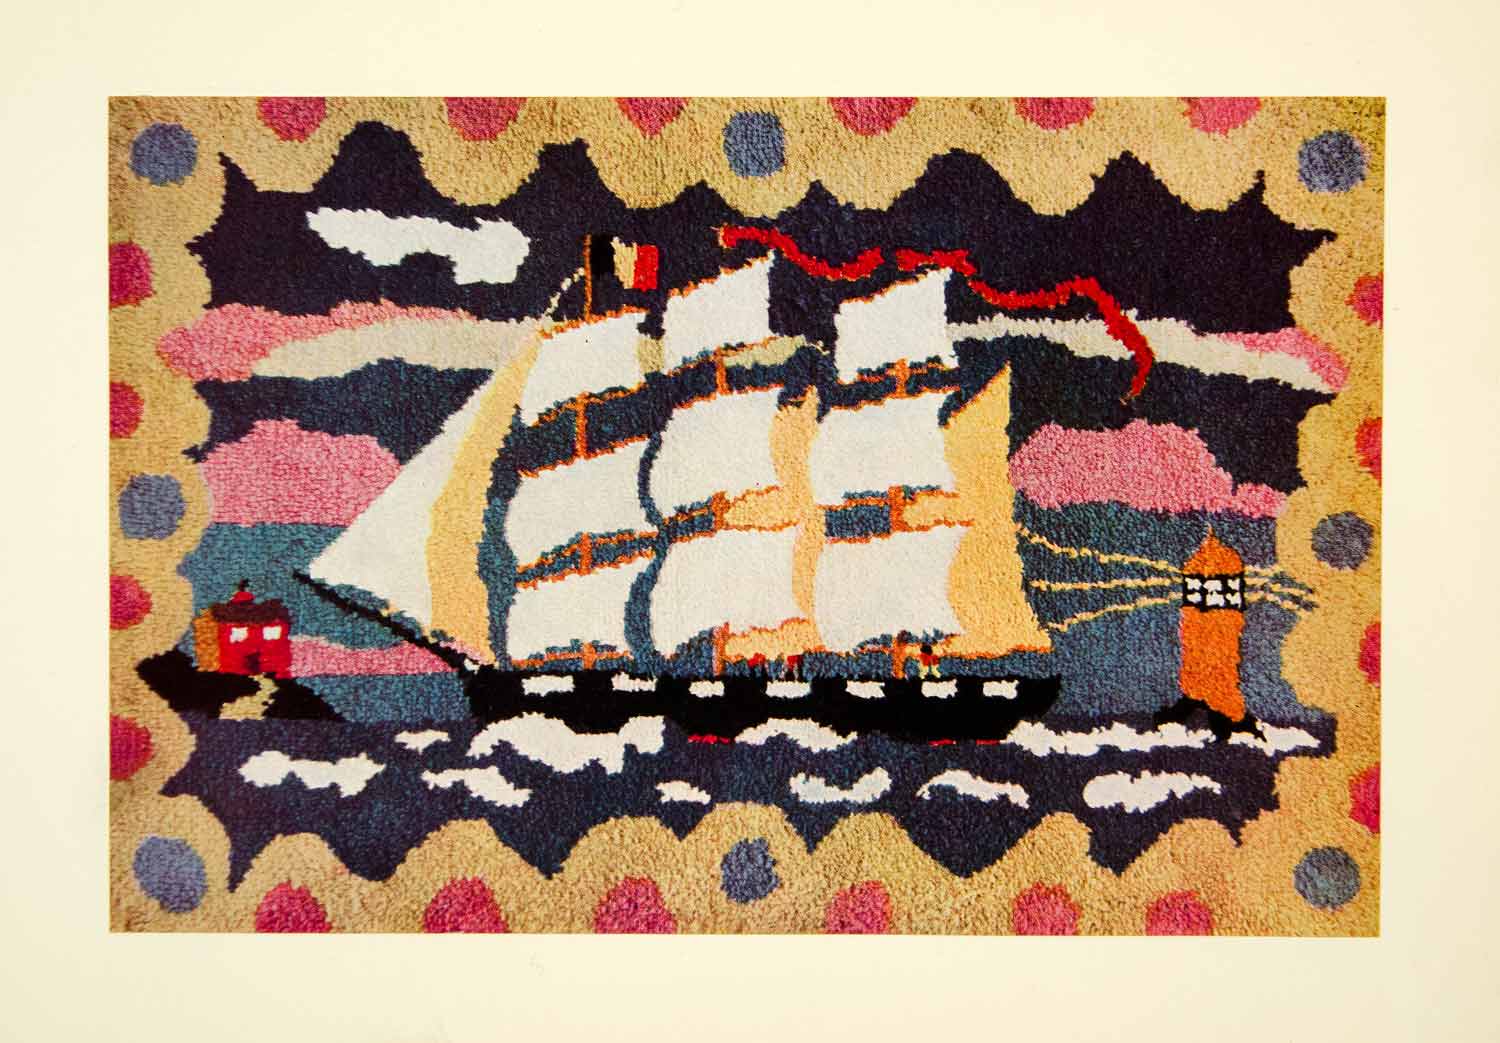 1934 Print Textile Rug Modern Ship Ocean Interior Decorating Ocean XDG9